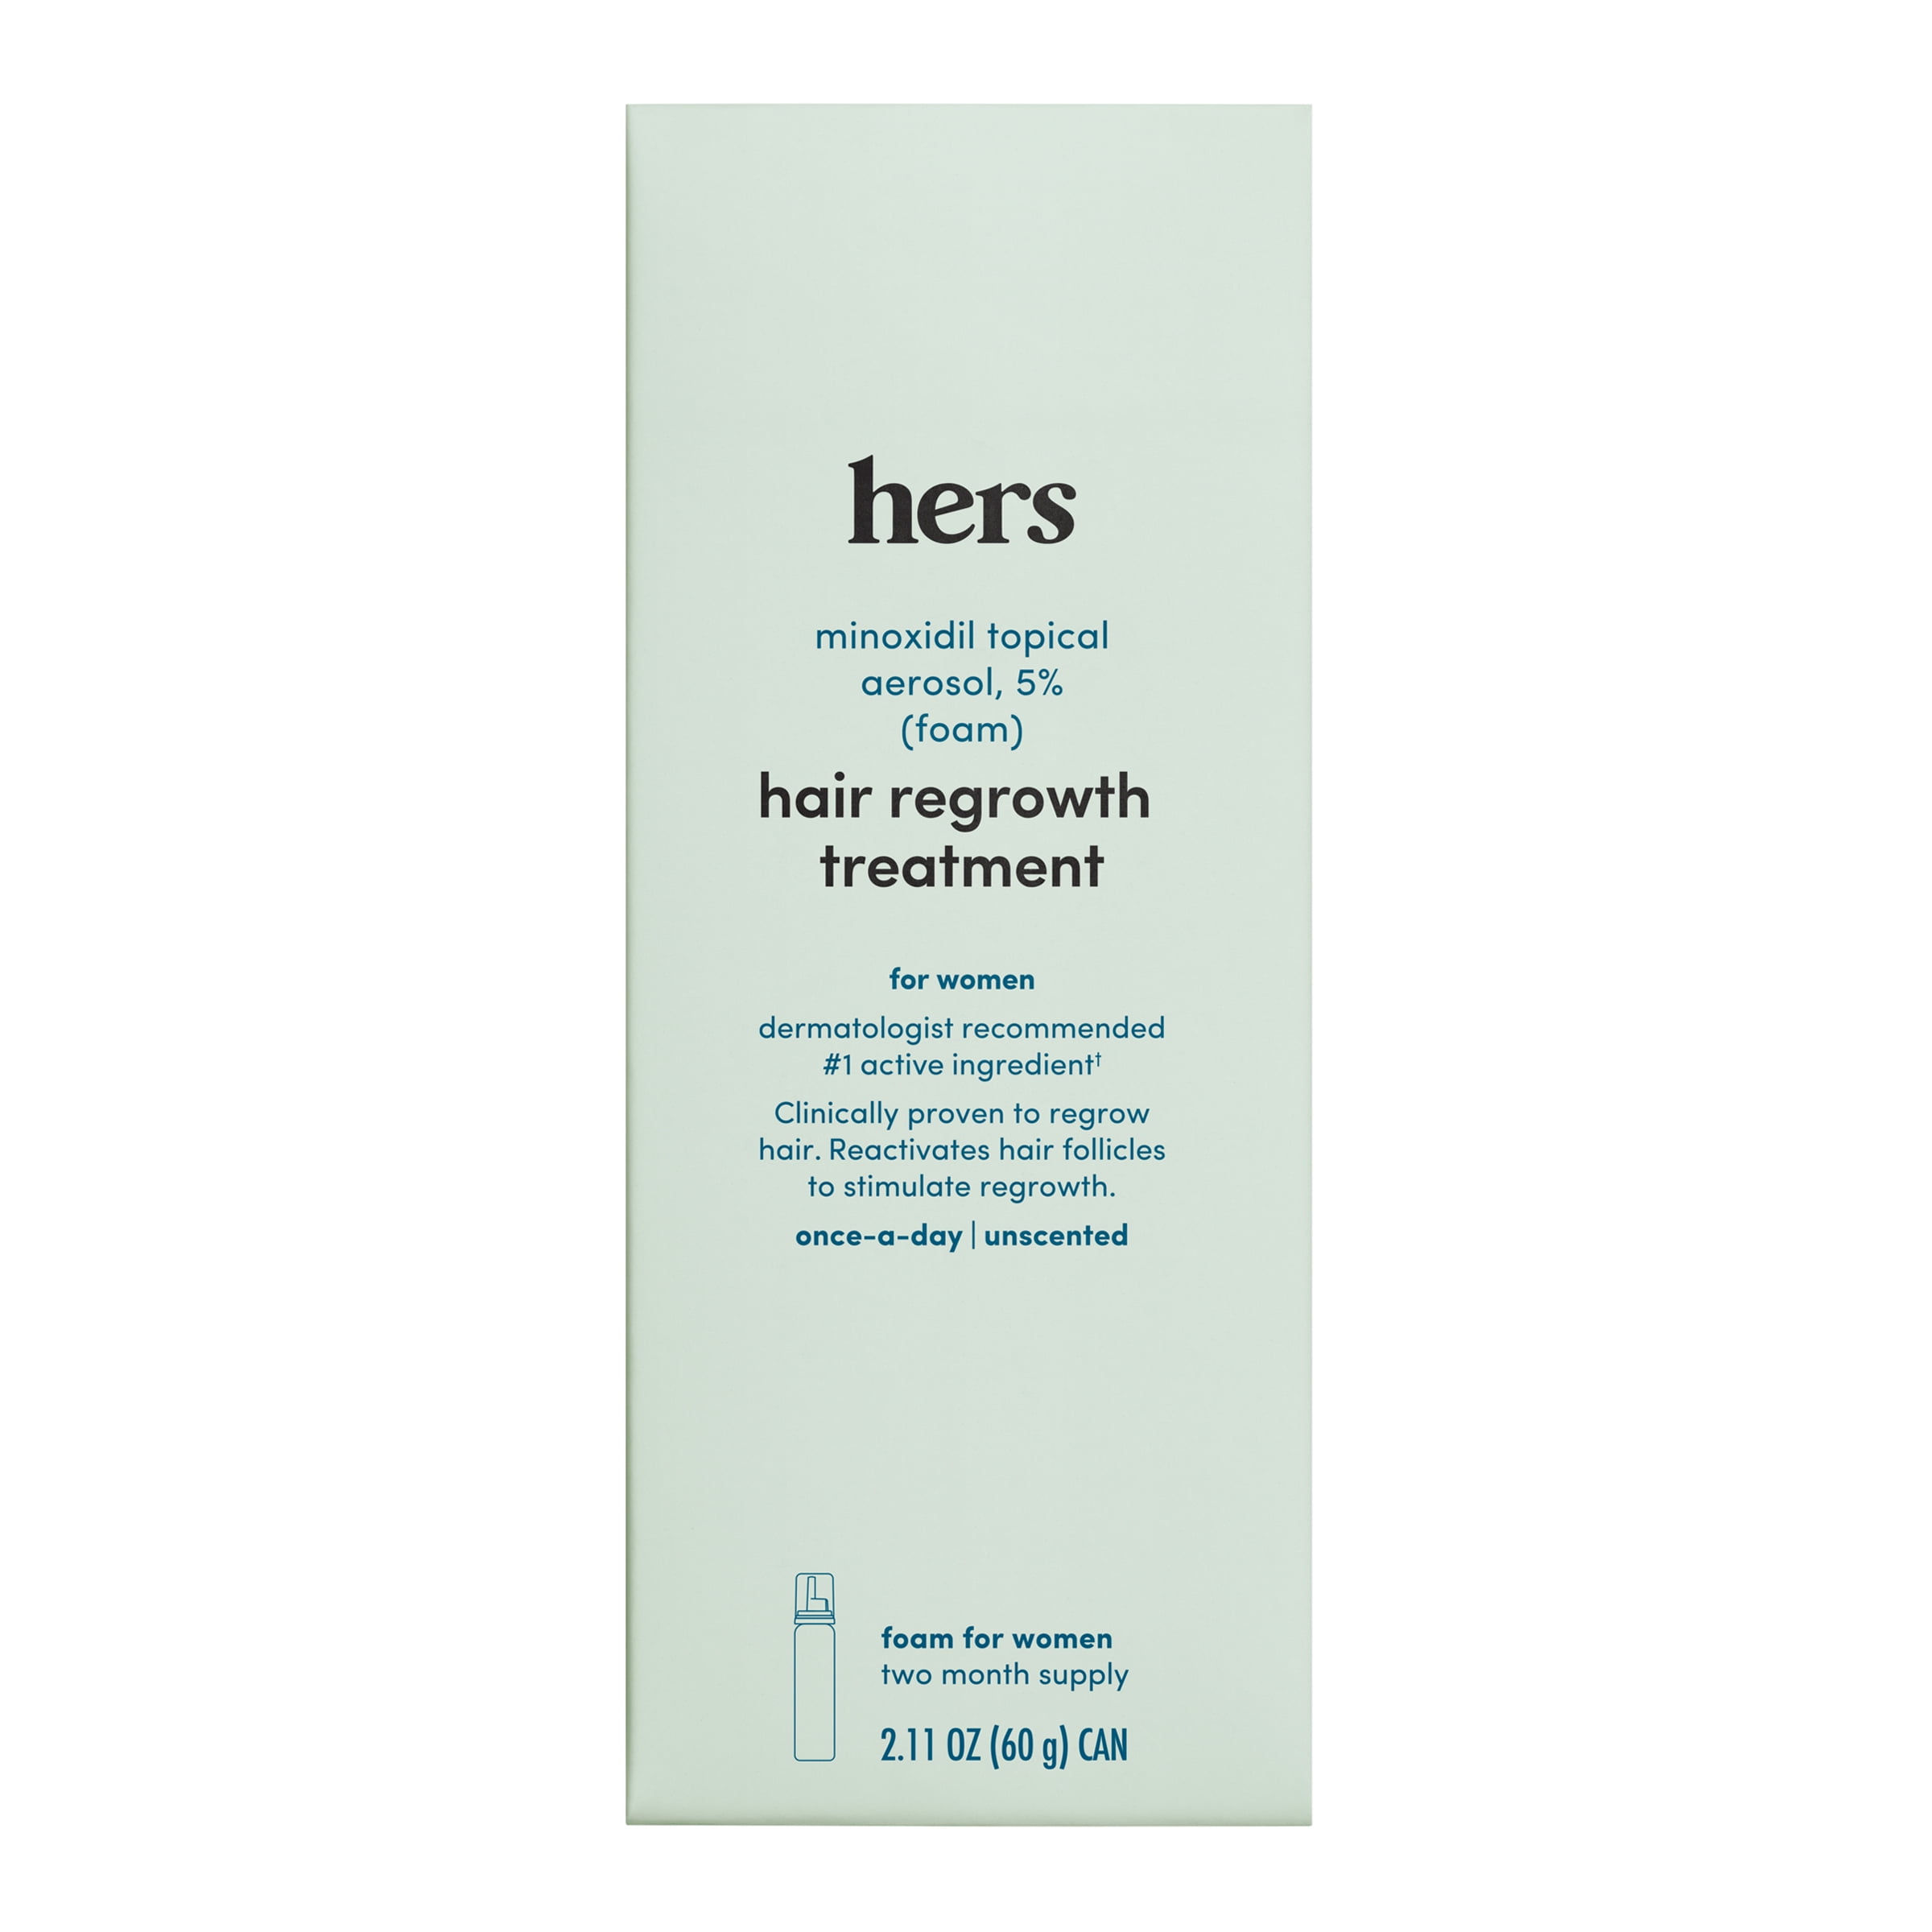 hers Minoxidil 5% Topical Foam, Hair Regrowth Treatment for Women, 2.11 fl oz